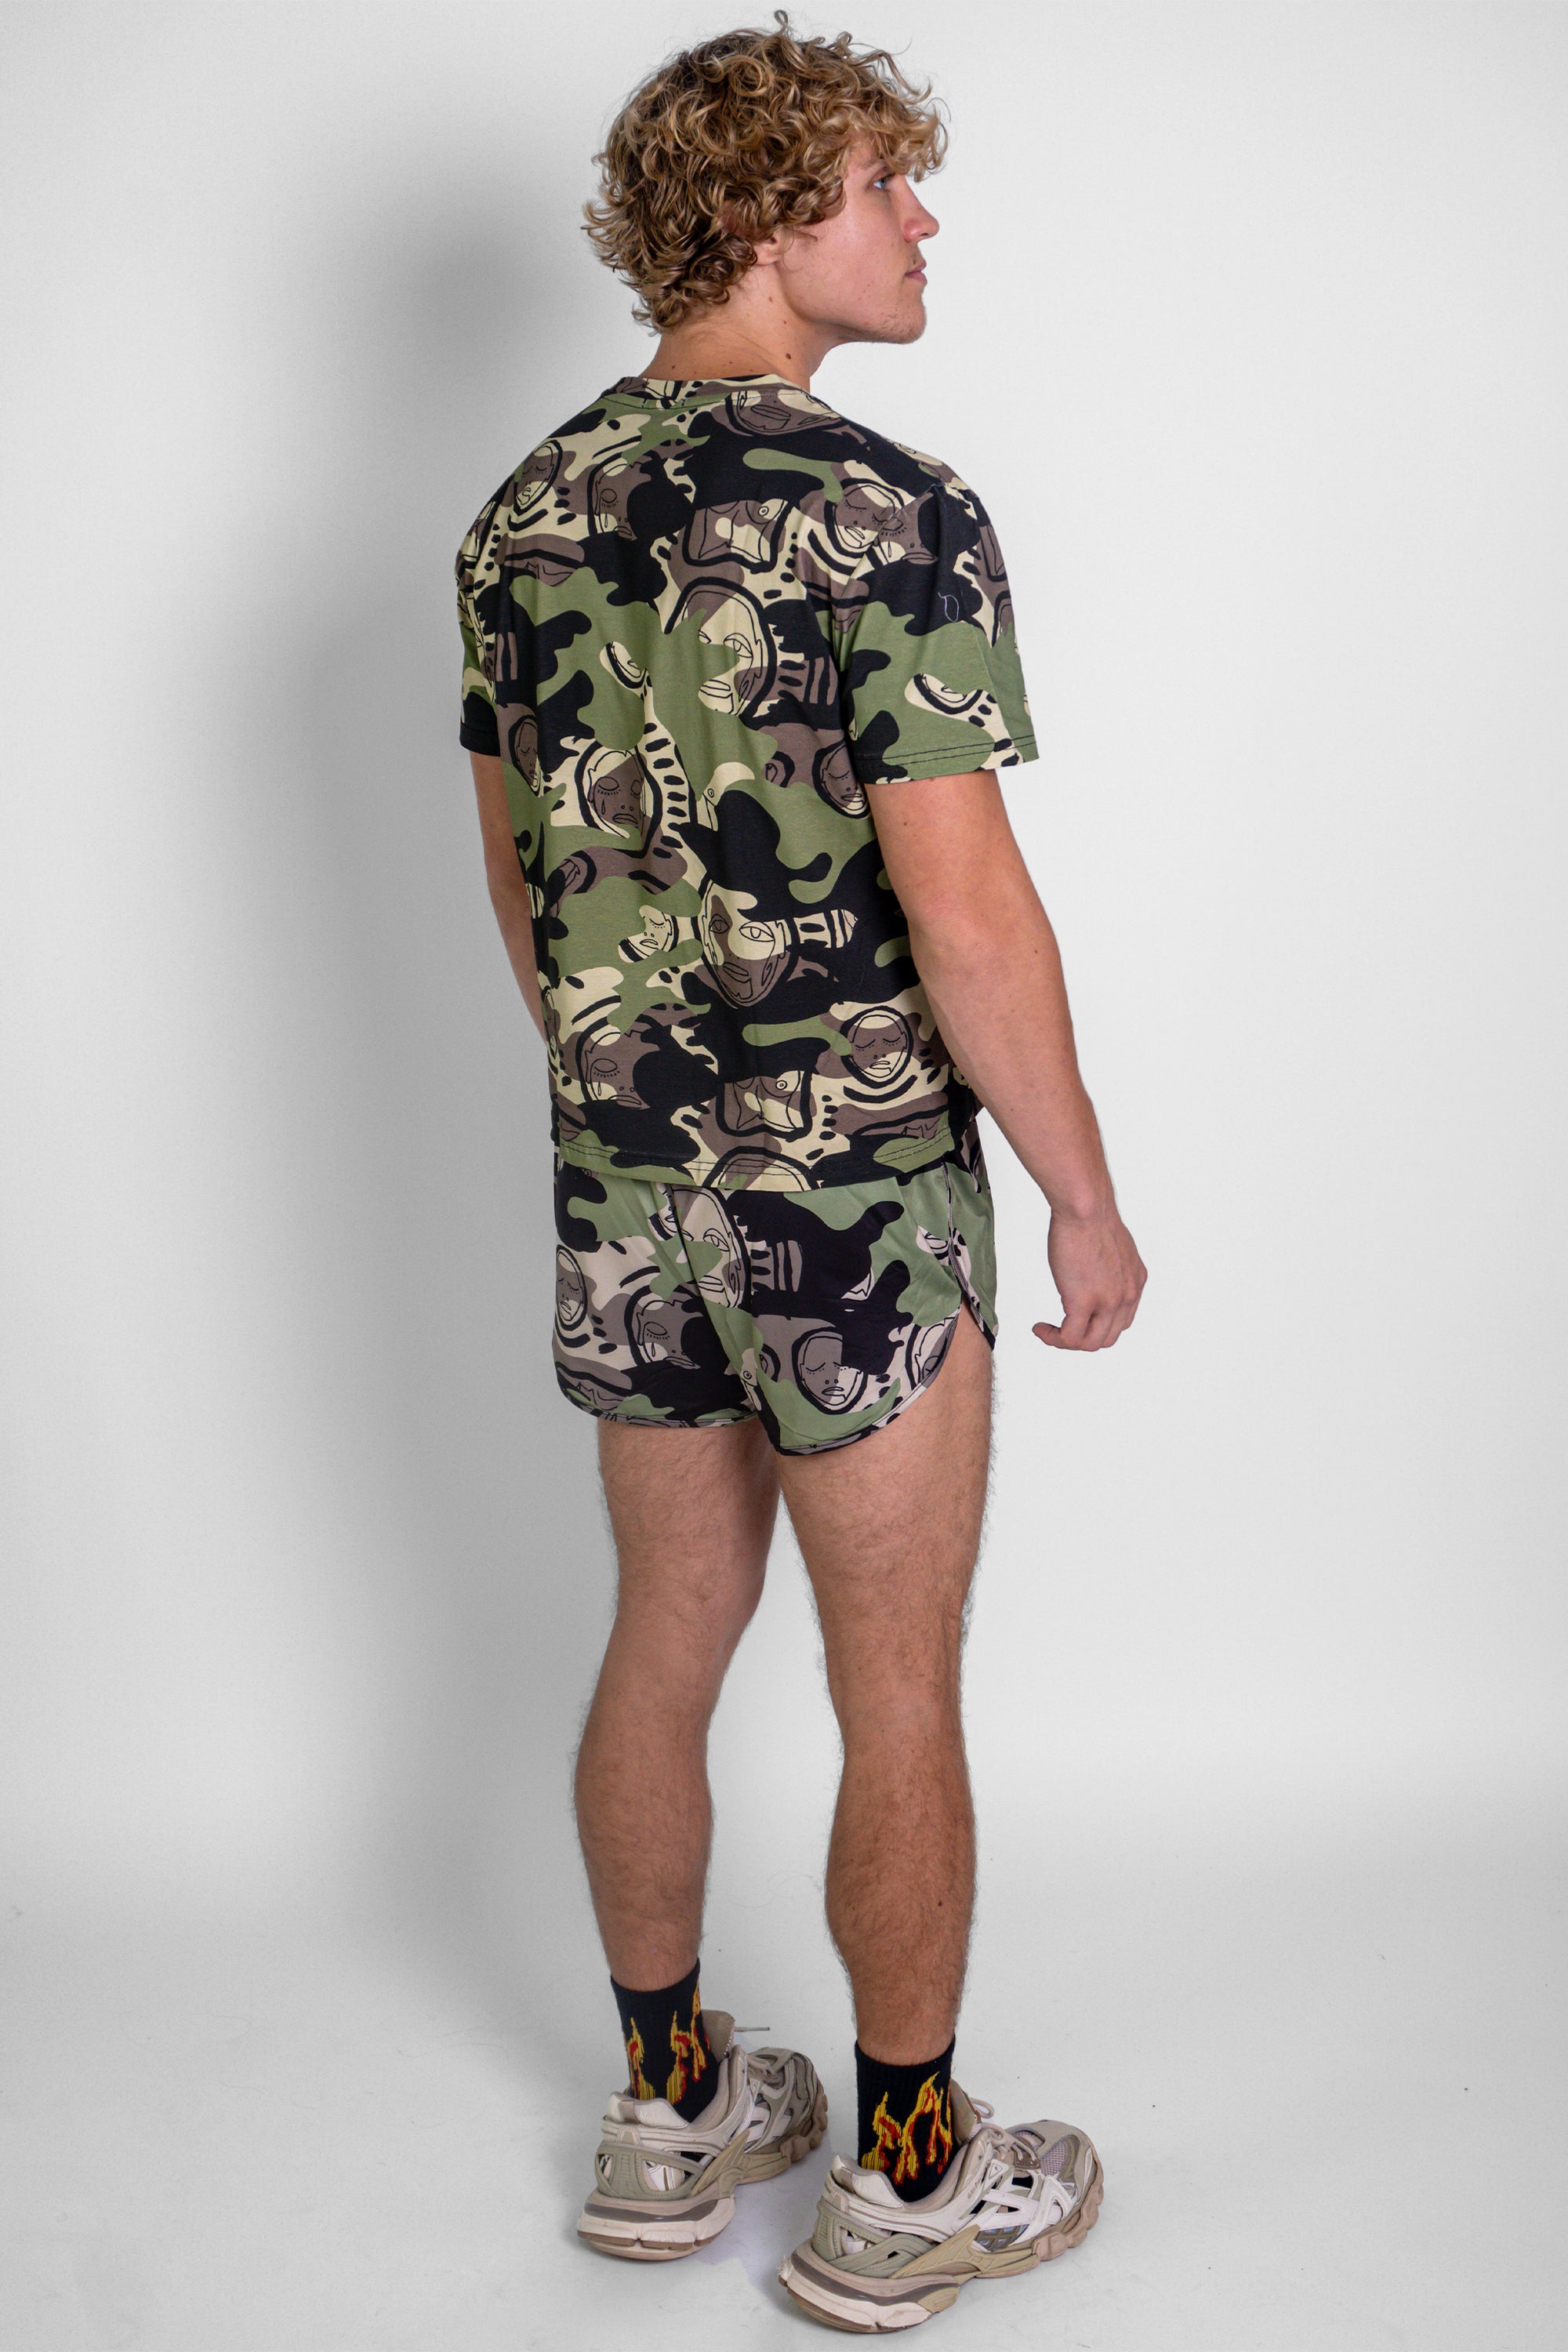 'Camouflage' Shorts - Patrick Church